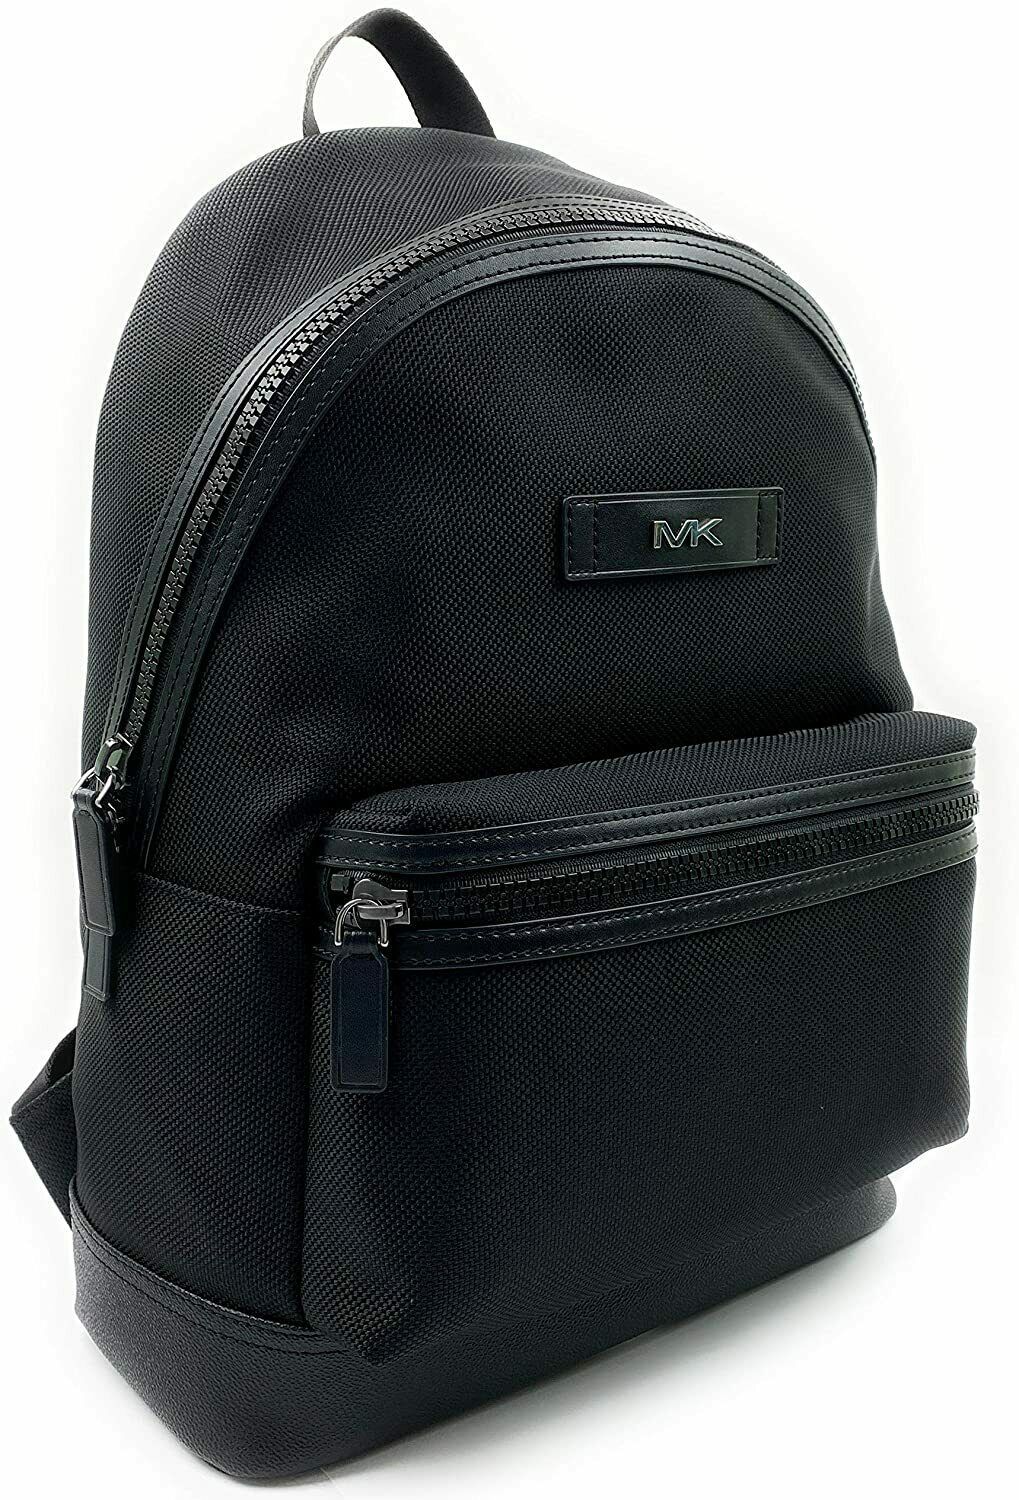 NWB Michael Kors Kent Sport Black Nylon Large Backpack 37F9LKSB2C Dust Bag FS